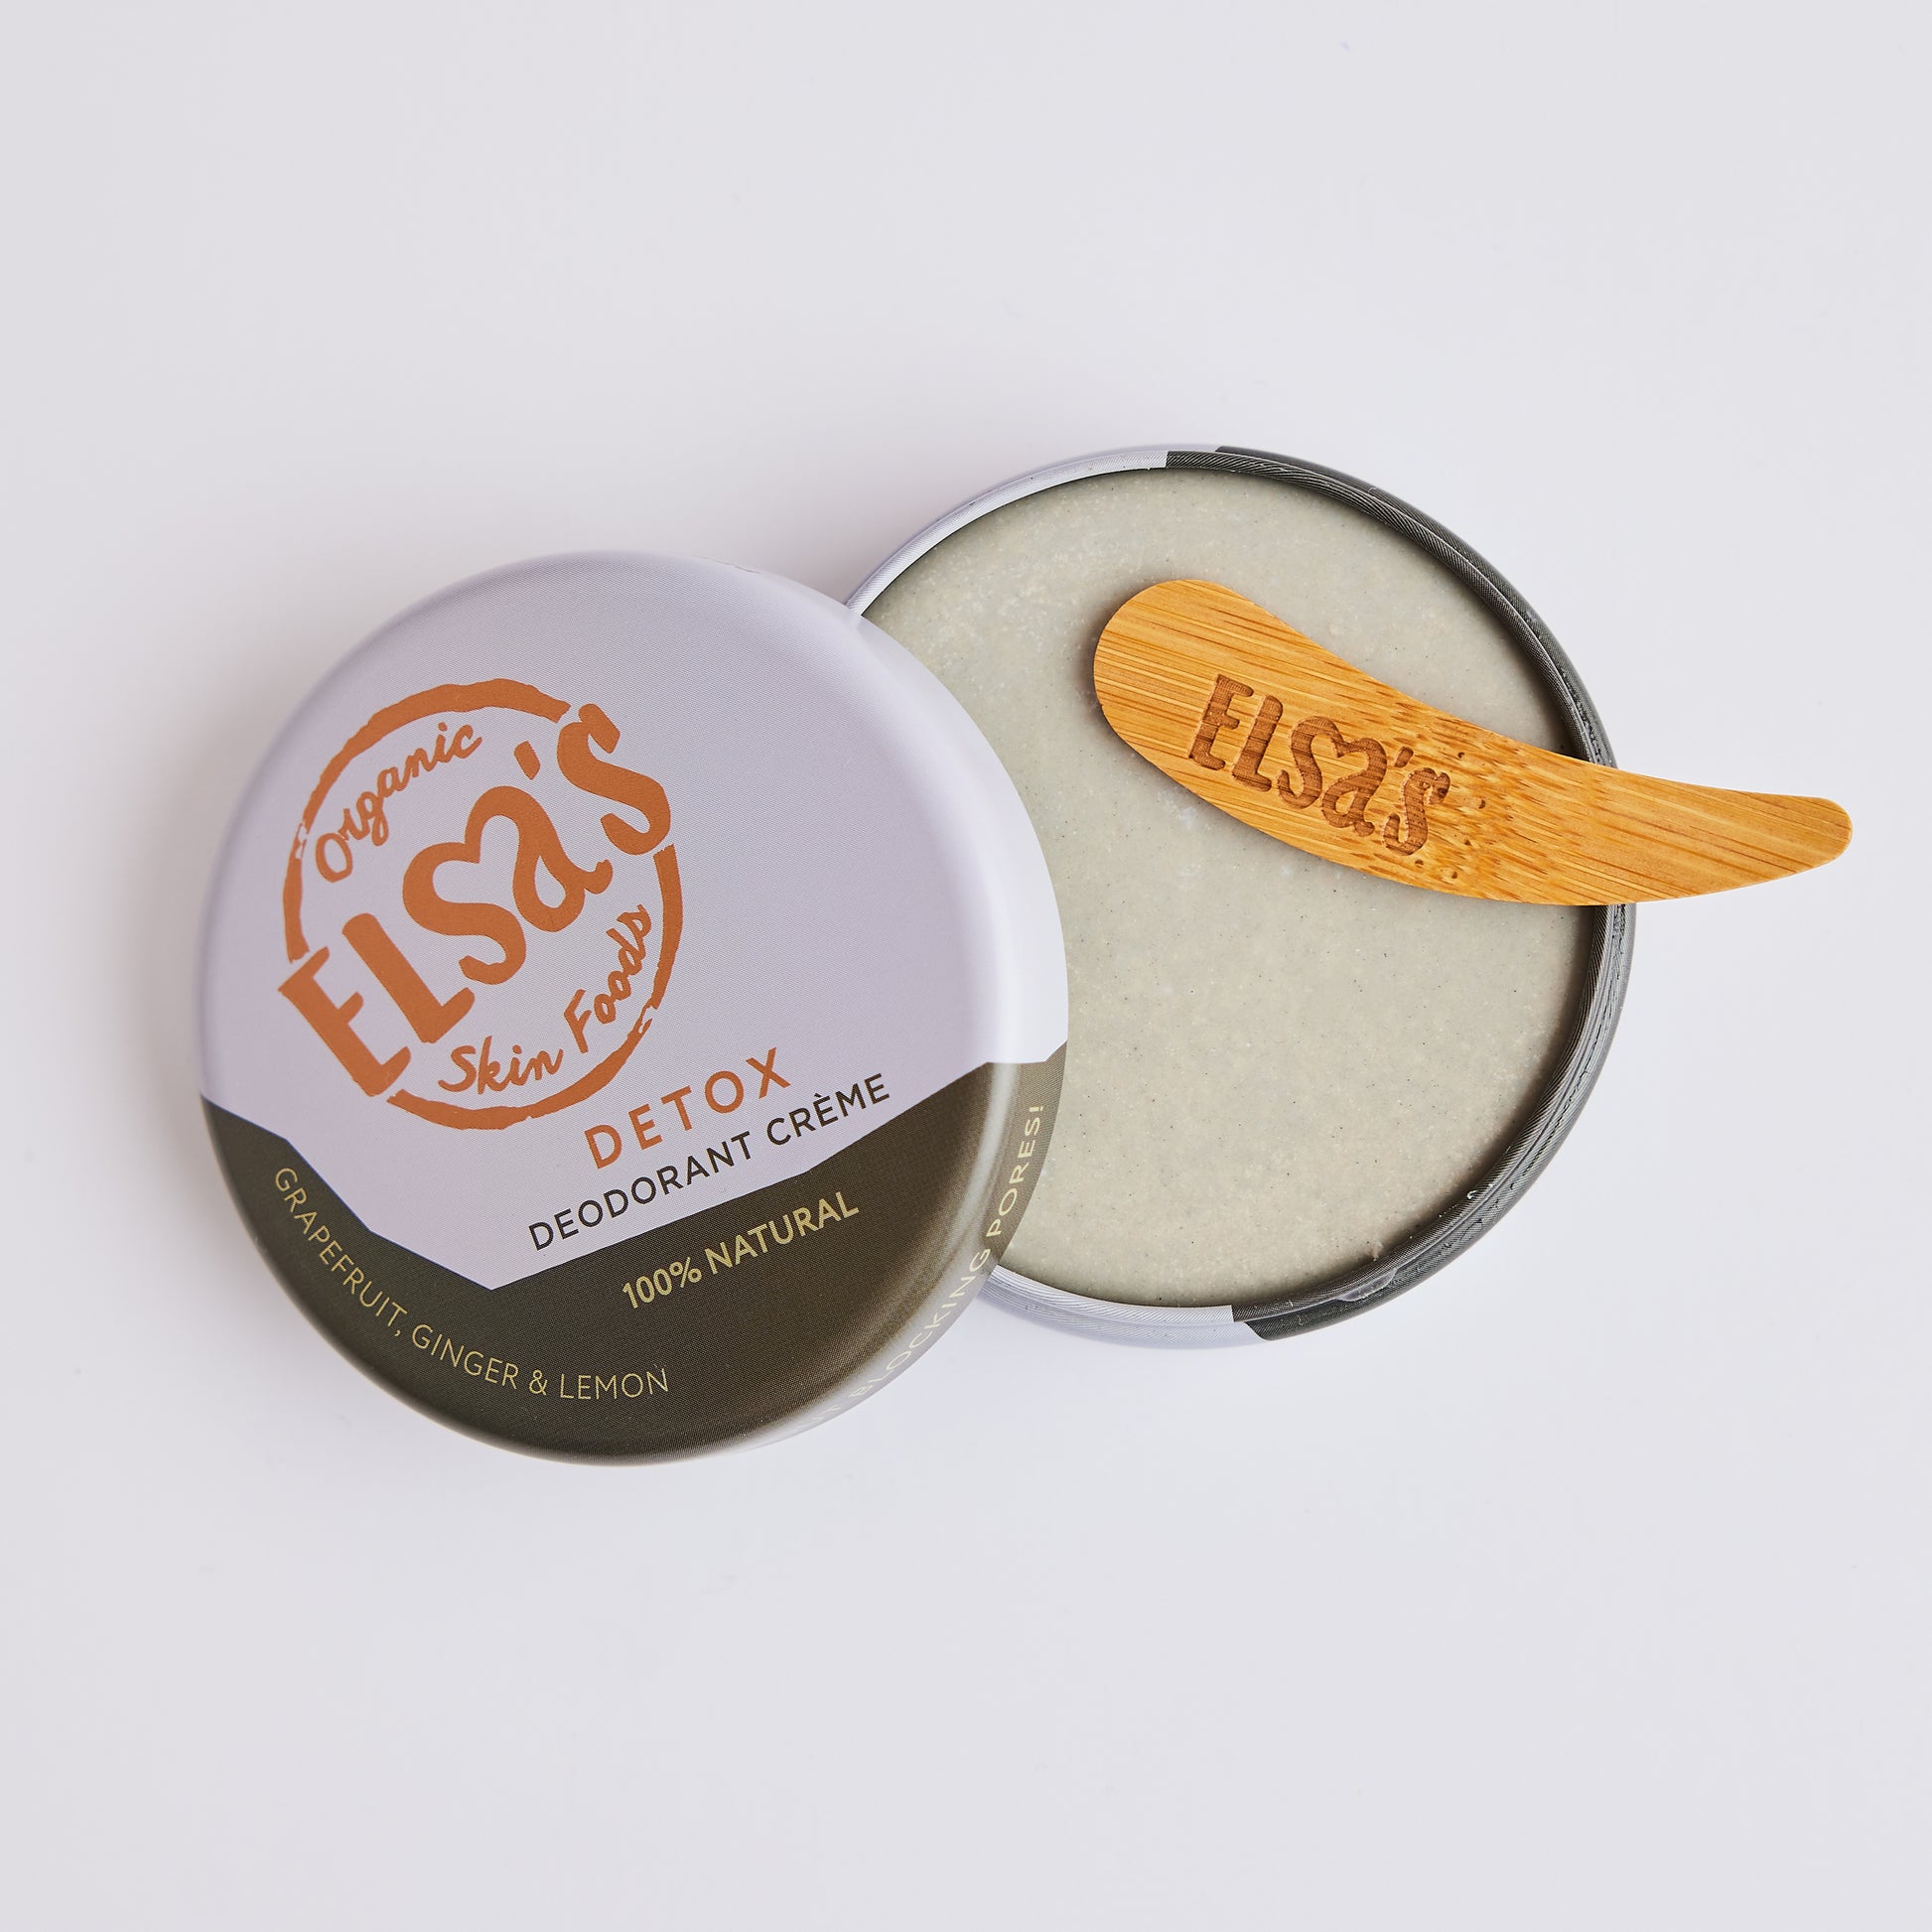 Elsas_Organic_Skinfoods Deodorant Cream Detox Open